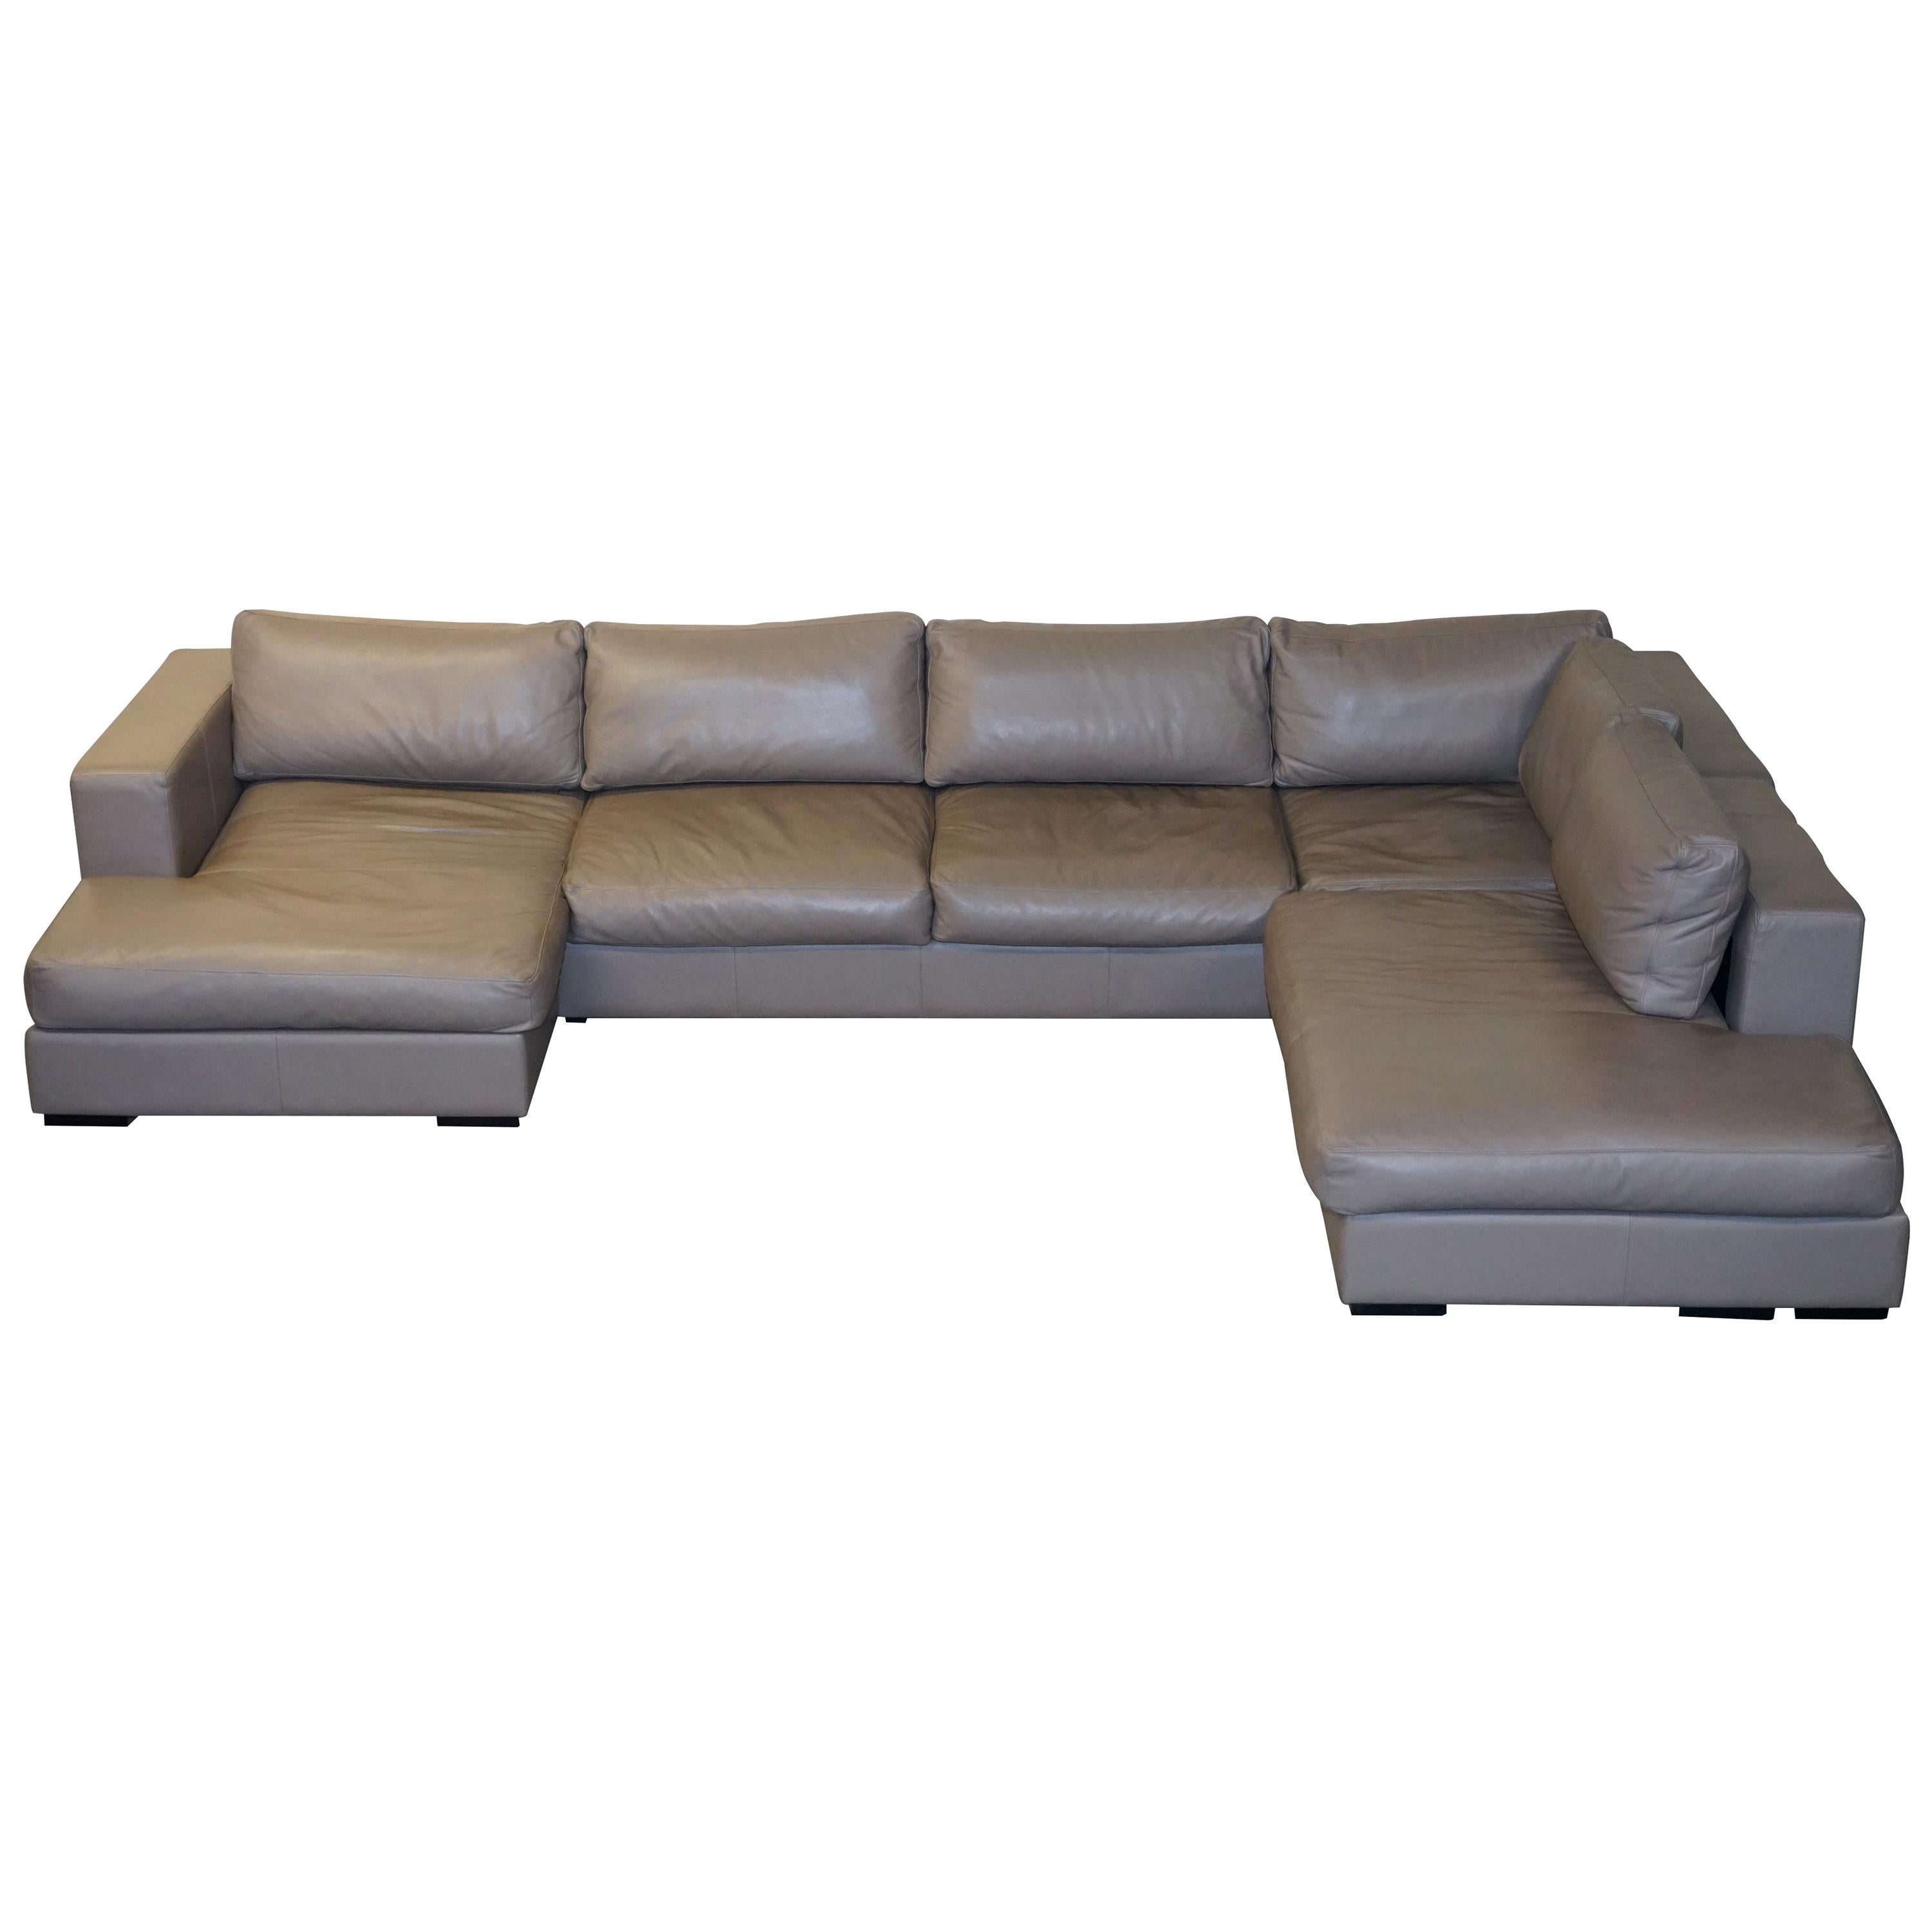 Sublime Bo Concepts Cenova Grey Leather Corner Sofa Chaise Seats 5-6 For Sale